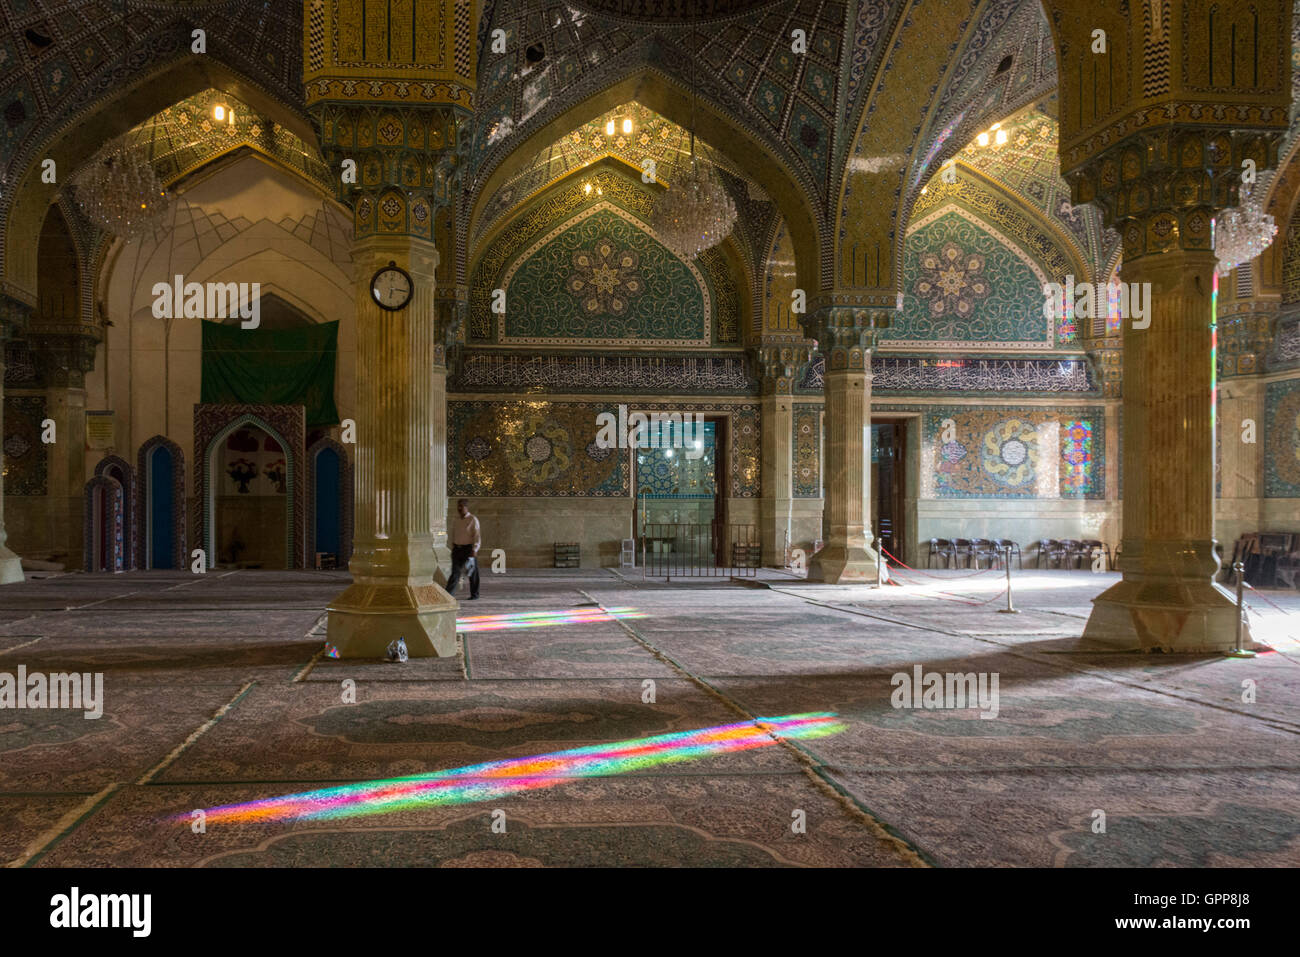 Qom, Emam Hasan Askari (Imam Hassan) Mosque, Pillars Stock Photo